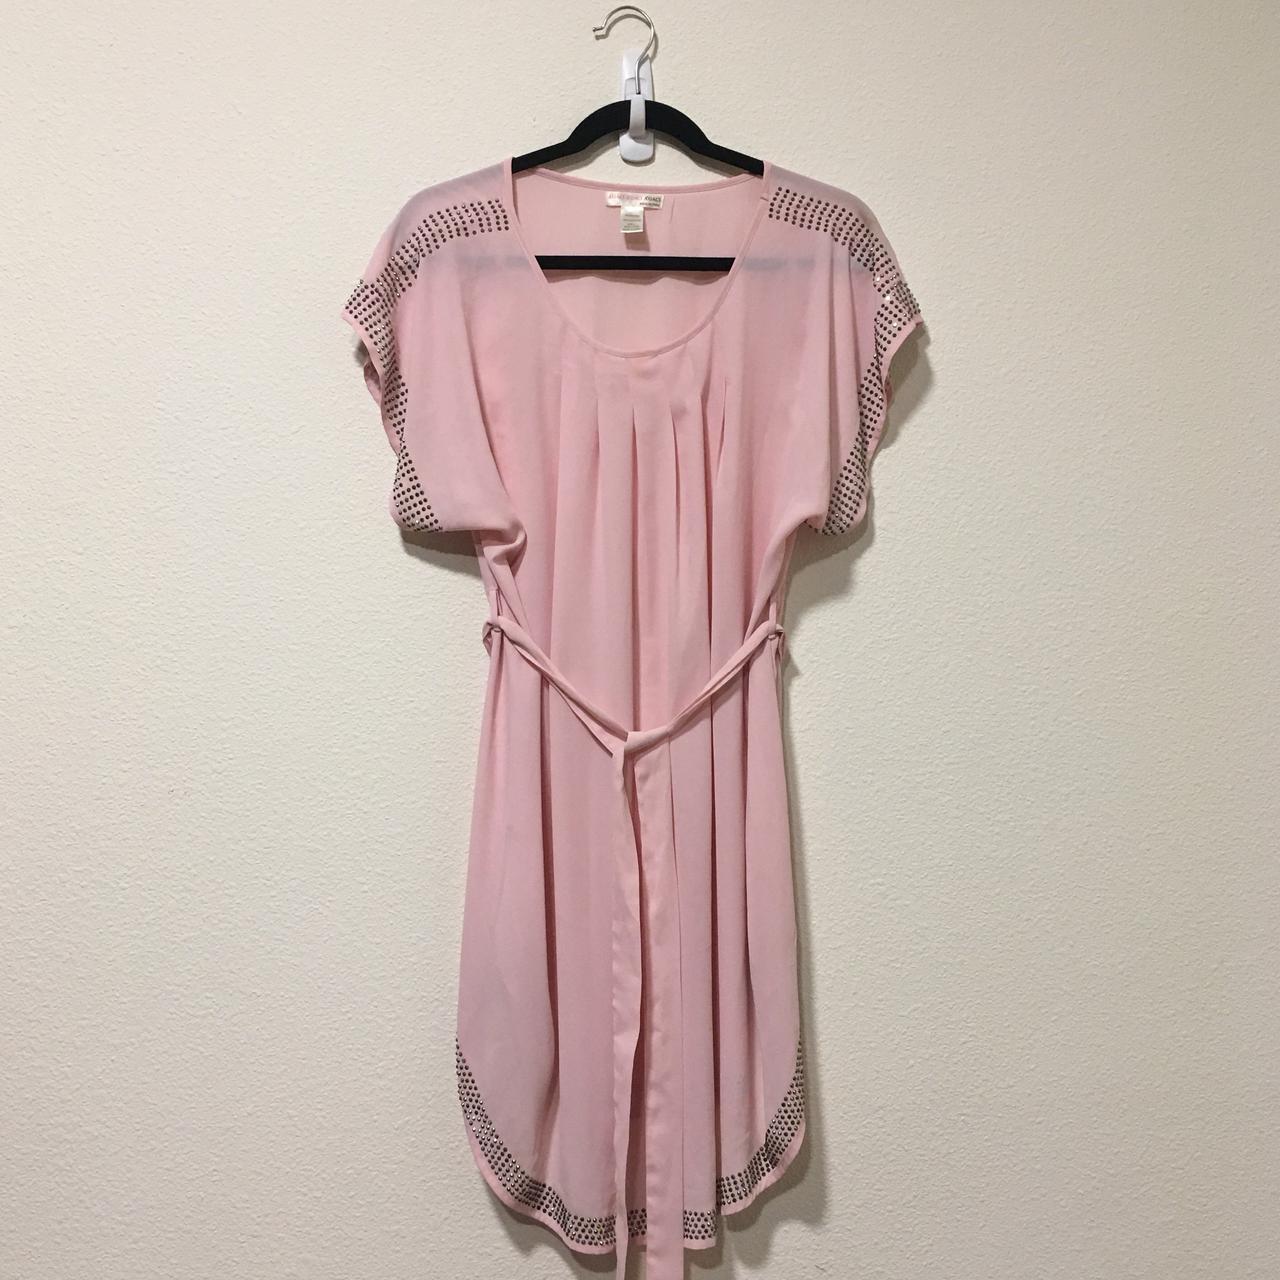 A'GACI Women's Pink Dress